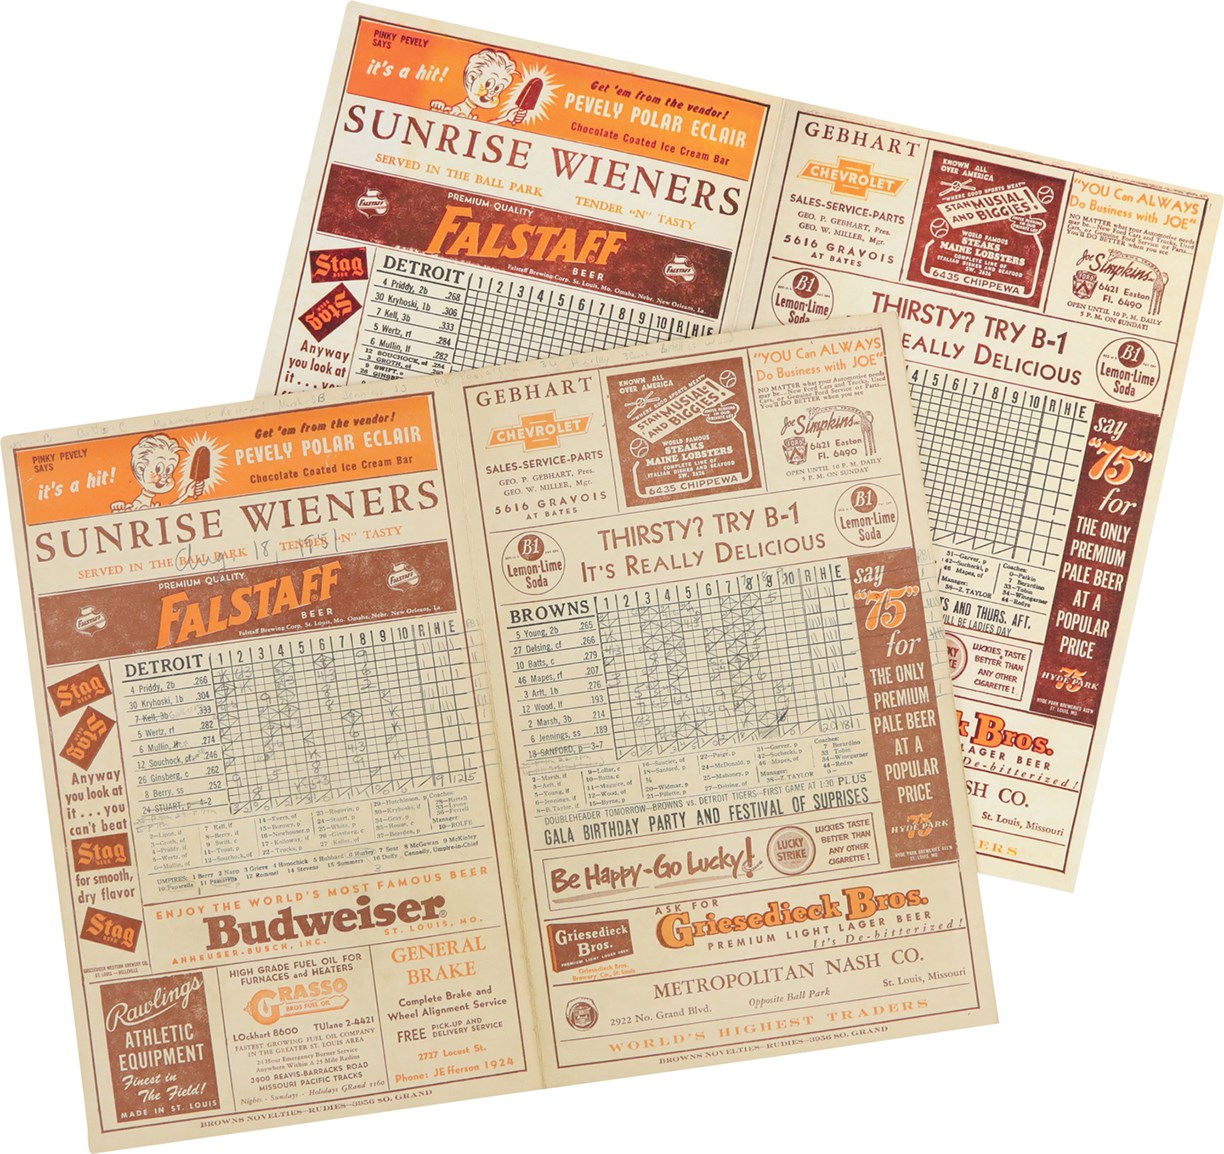 Baseball Memorabilia - August 18, 1951 Eddie Gaedel Original Scorecard from Game before Debut with Reproduction Scorecard from Debut Game